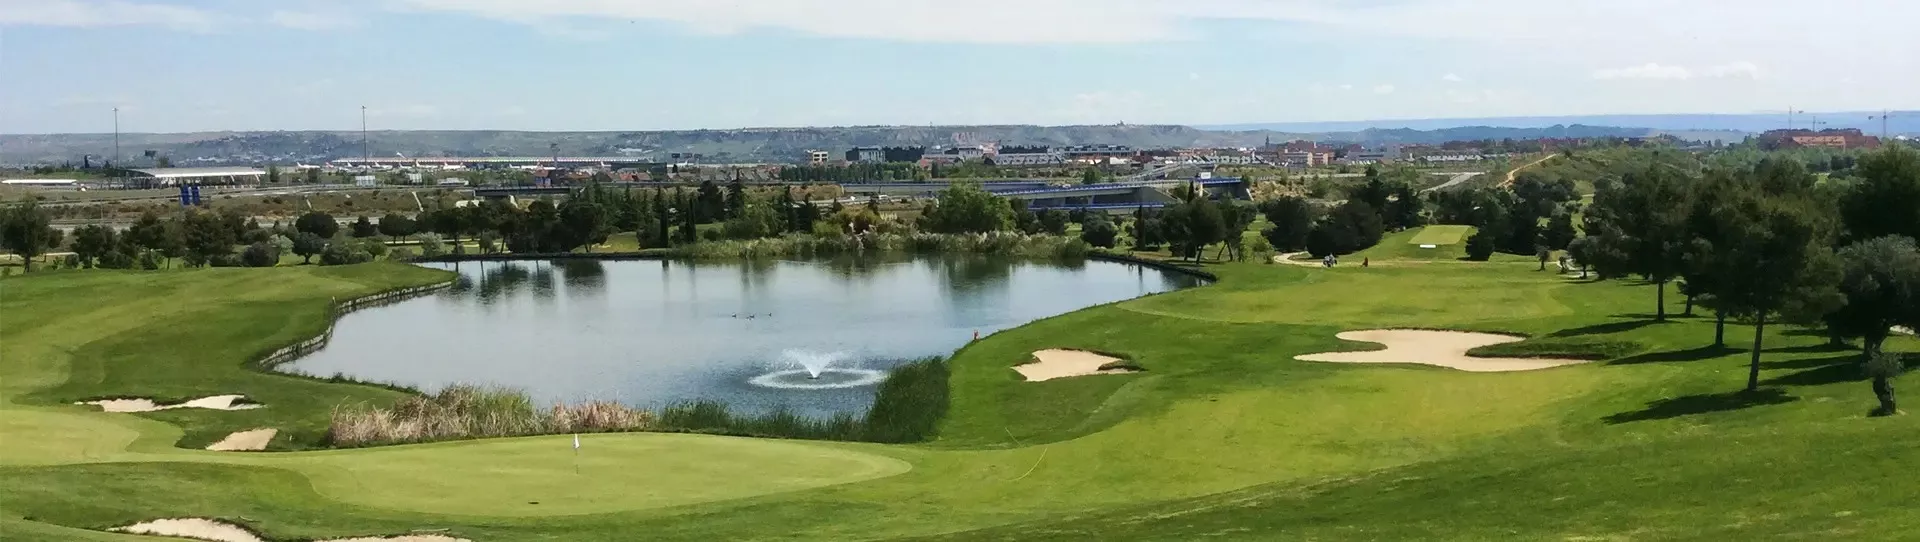 Spain golf courses - Olivar de la Hinojosa Golf Course - Photo 1